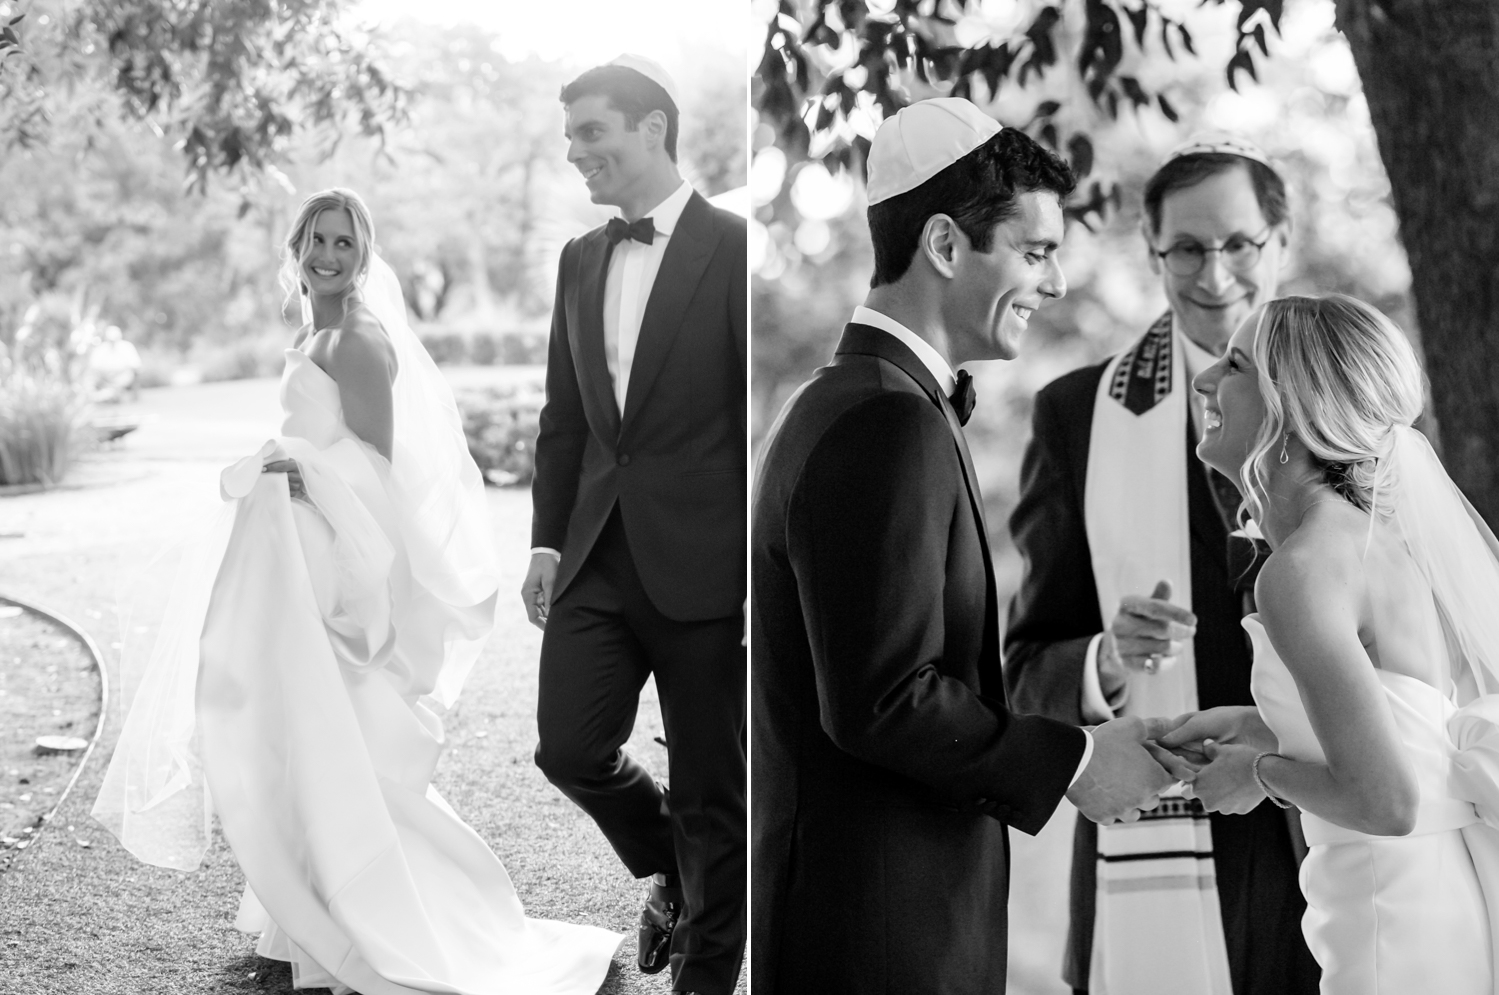 Left: The bride and groom walk together, smiling. Right: The bride and groom laugh together at the altar